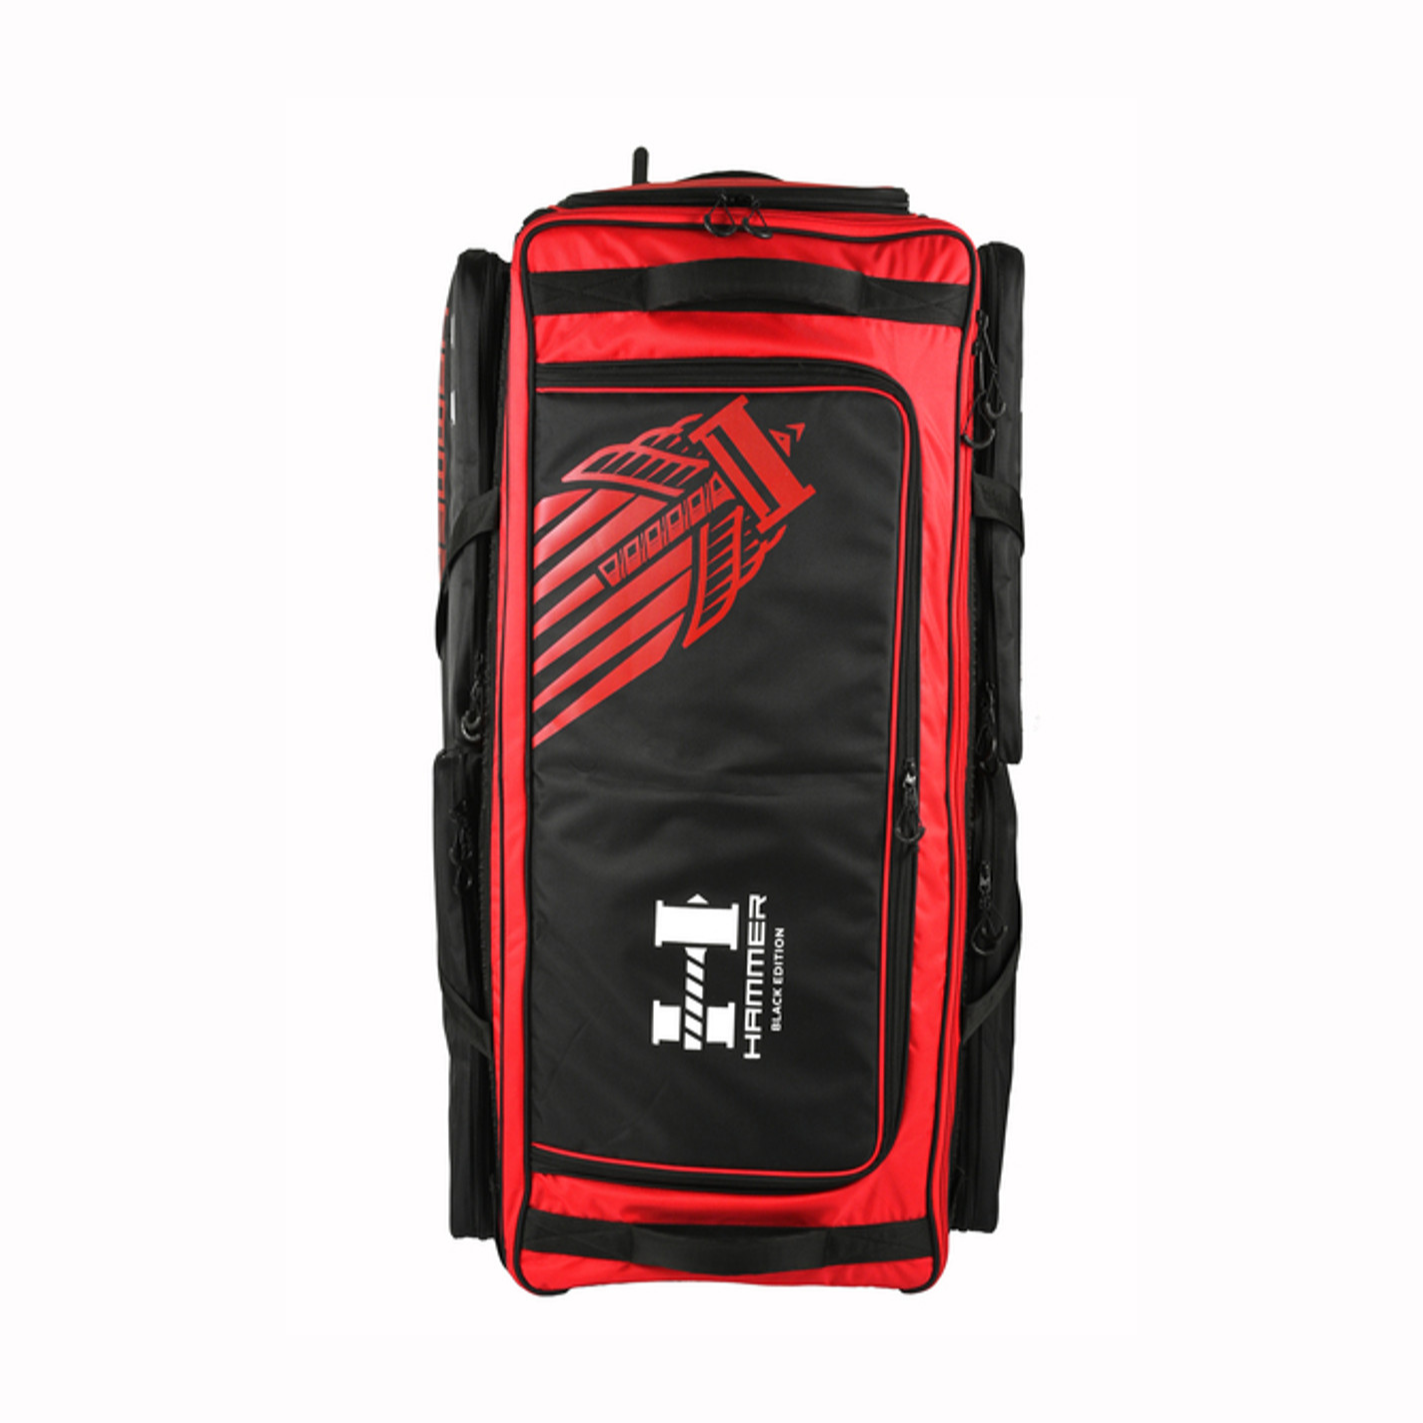 Hammer Black Edition Trolley Wheelie Cricket kit Bag